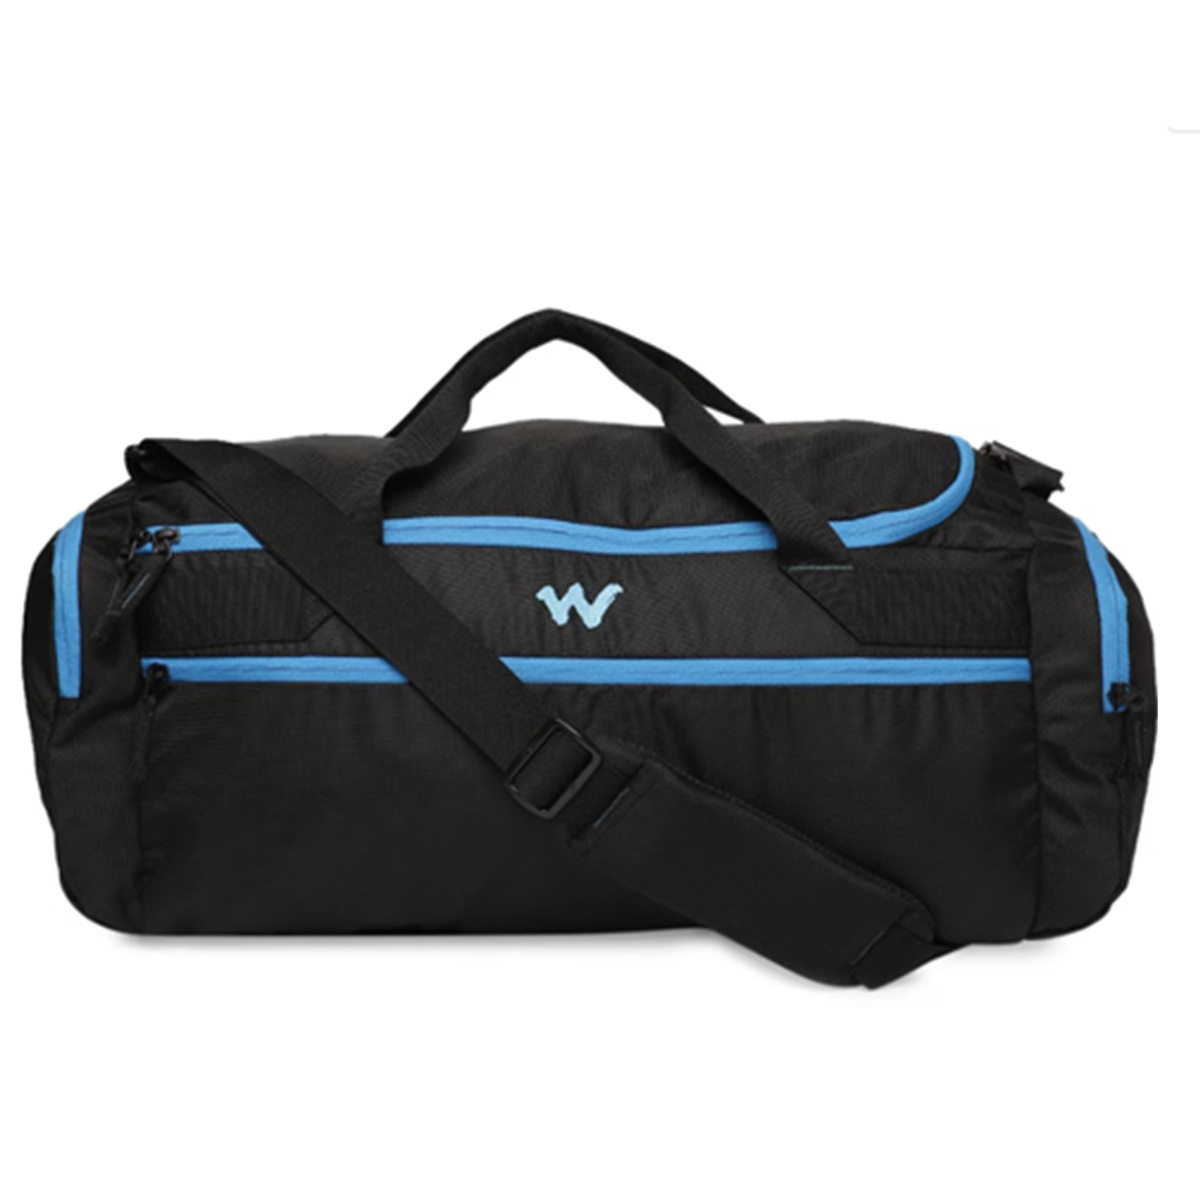 Wildcraft Duffle Bag MYNT DUF 2 25L Black Blue